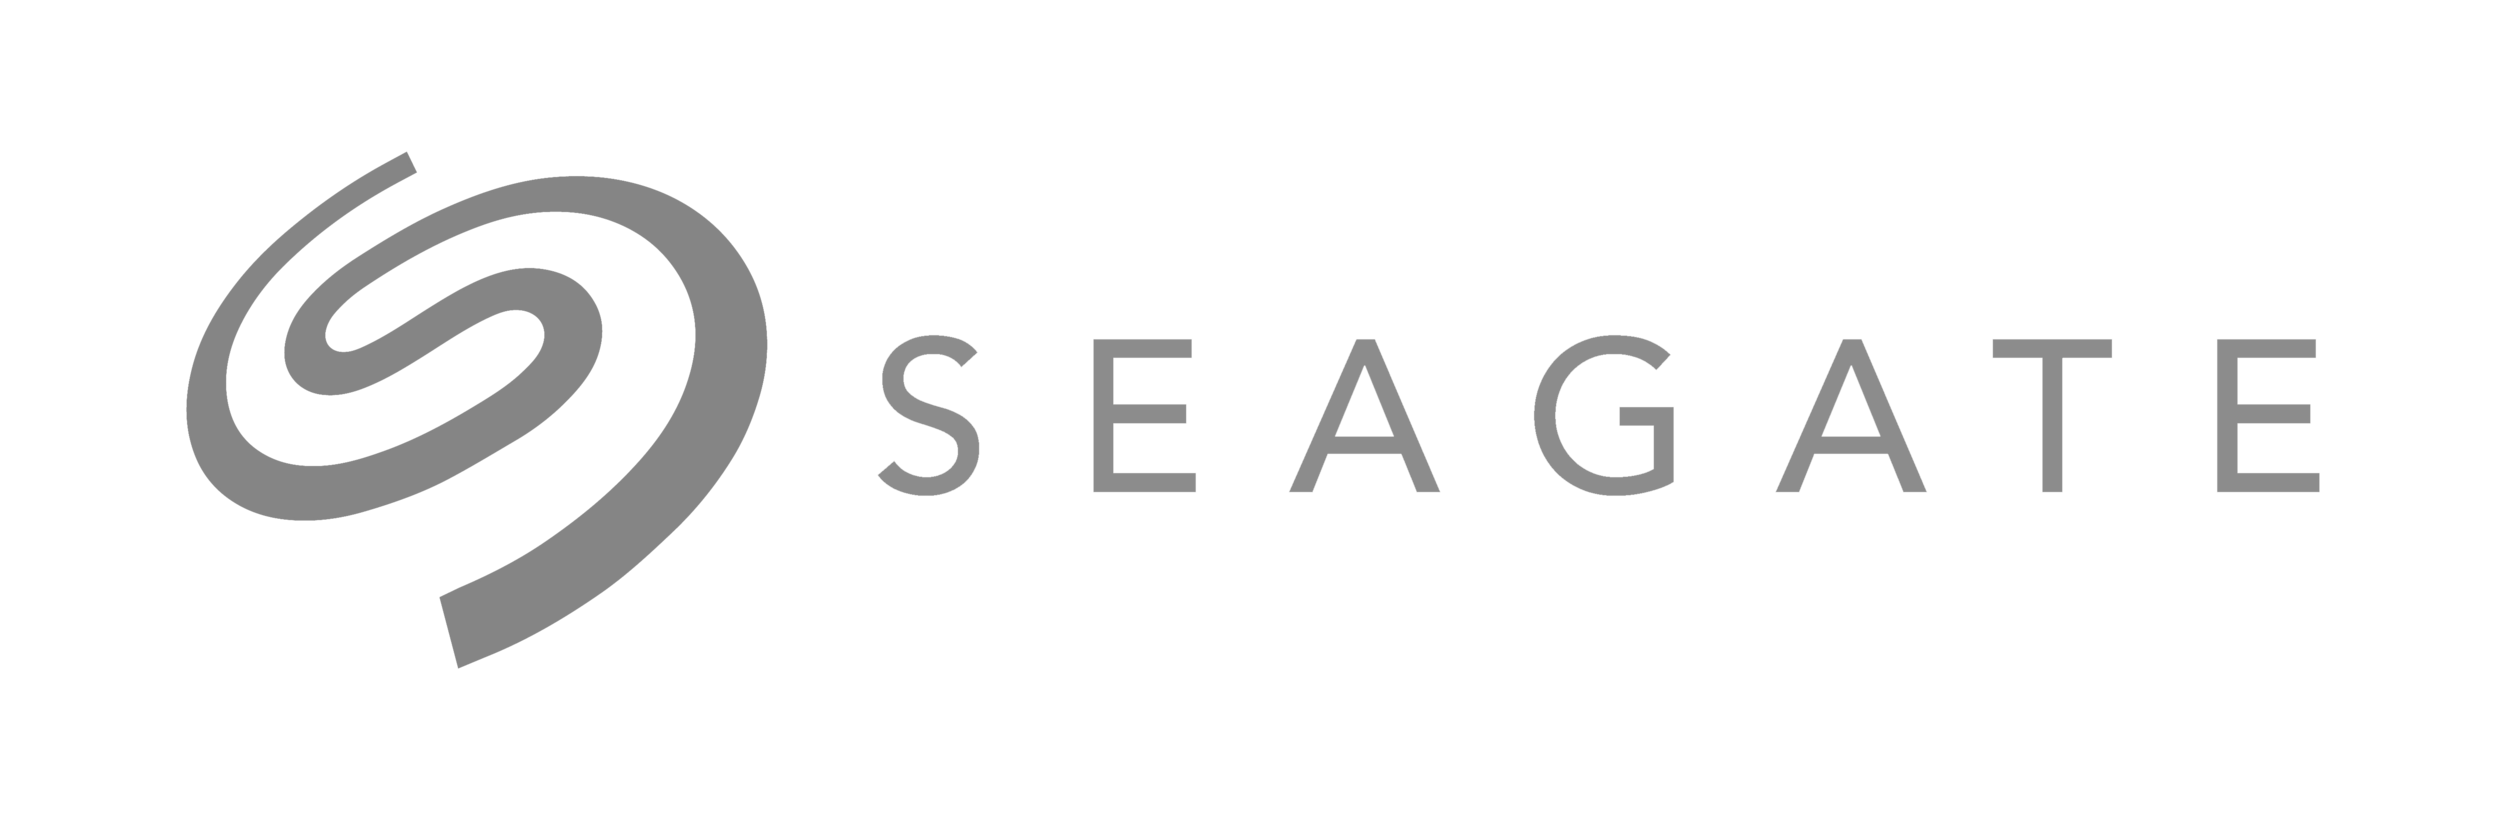 seagate-horizontal.png